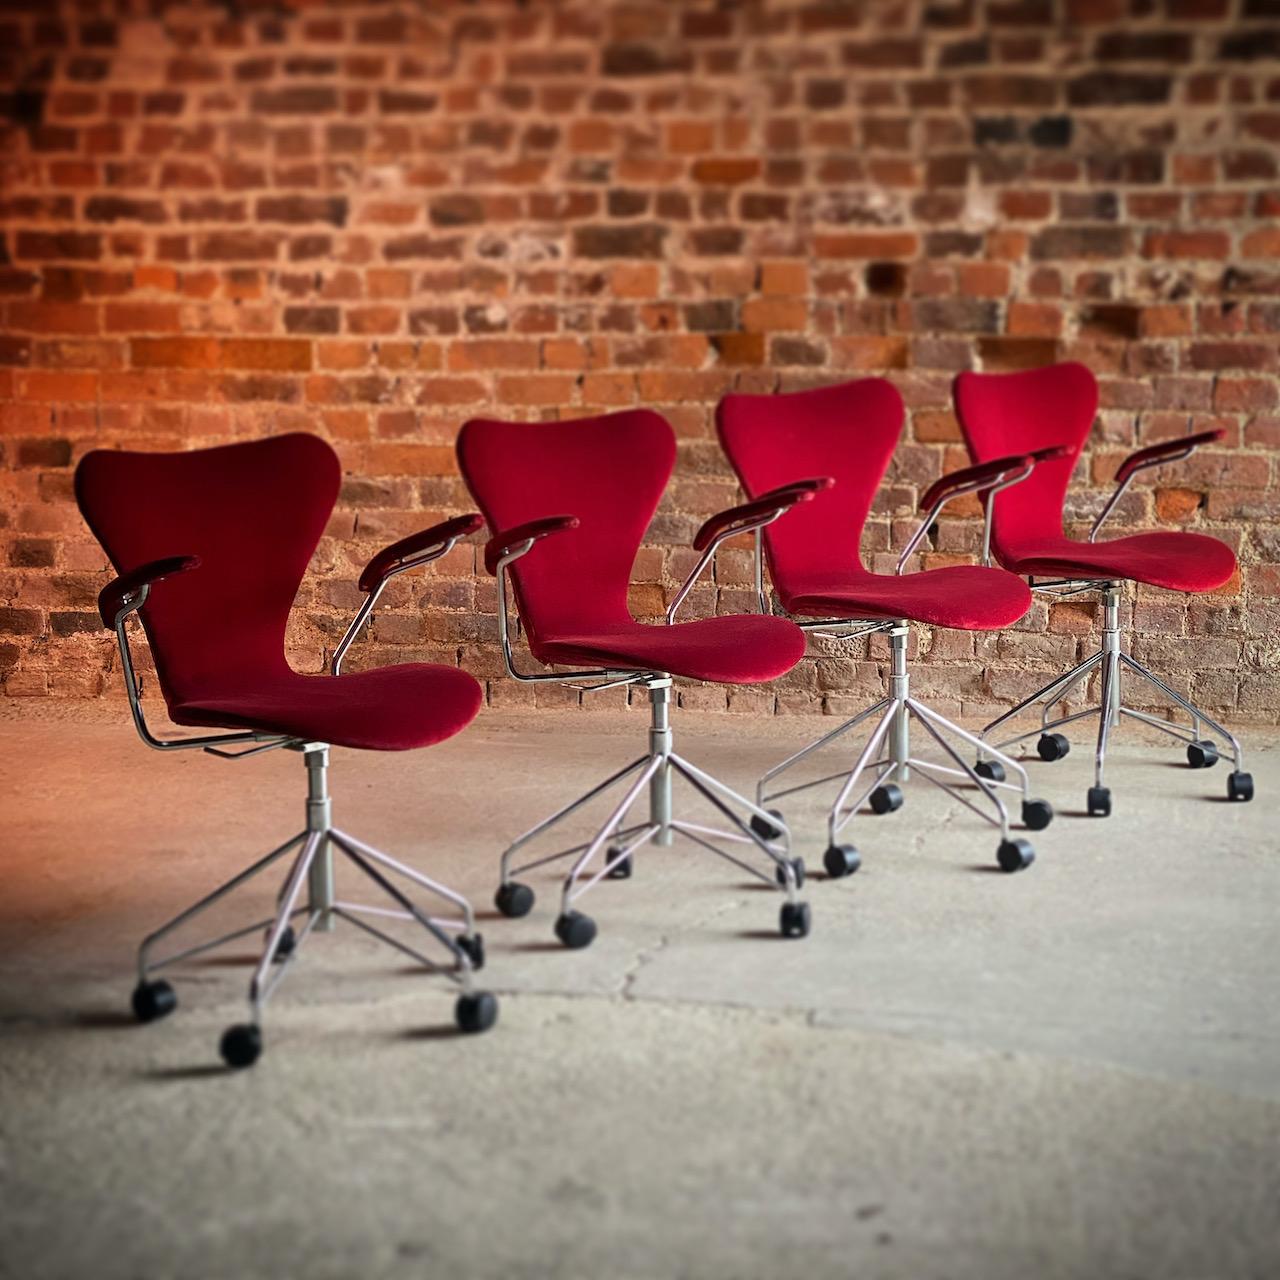 Arne Jacobsen Series 7 3217 Swivel chairs by Fritz Hansen 1996

Super fly set of four mid century Danish design Arne Jacobsen Series 7 ‘3217’ Swivel chairs by Fritz Hansen designed in 1955, the chairs covered in a sumptuous Plum red velvet with